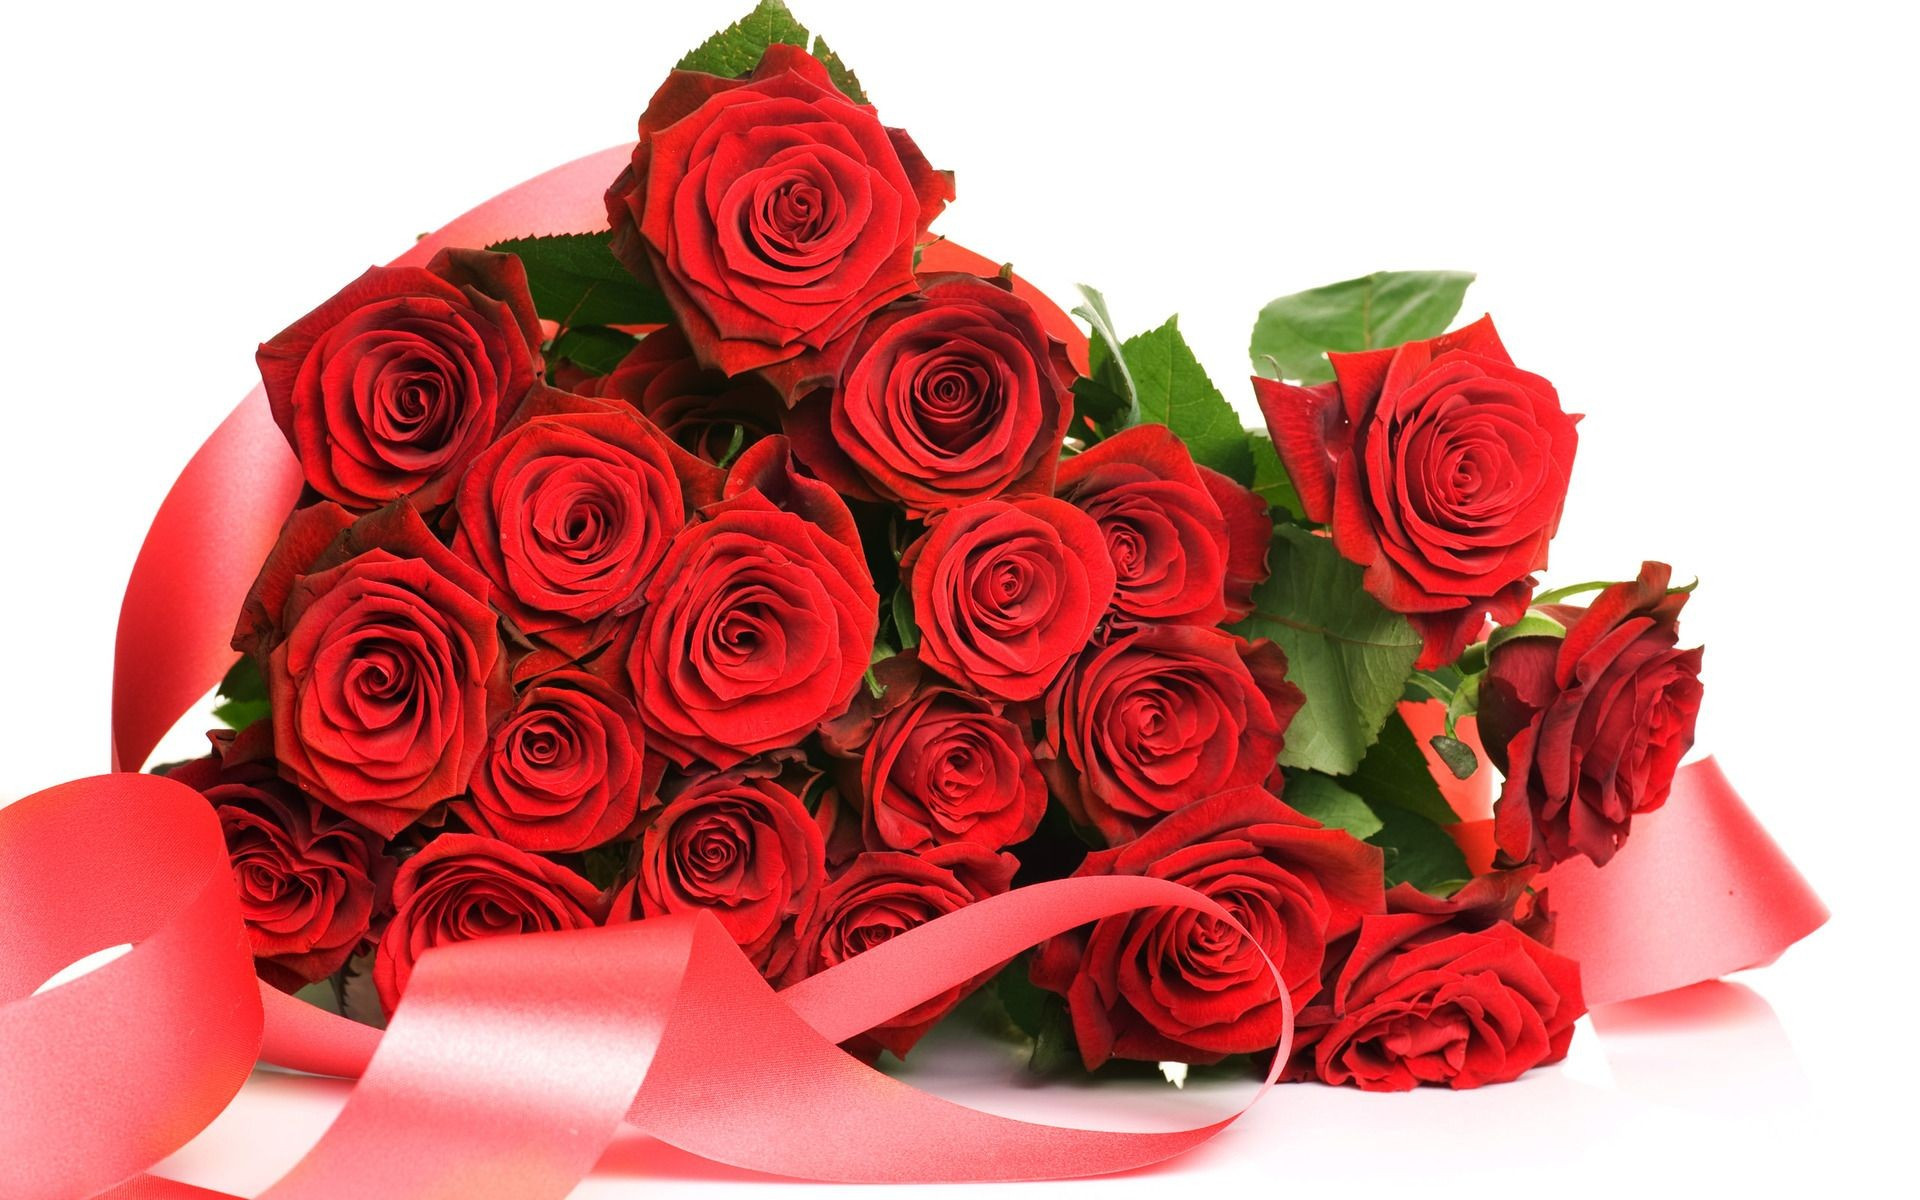 11 Popular Red Rose Vase 2024 free download red rose vase of 13 best of red roses in a vase wallpapers cuva wallpaper regarding red roses in a vase wallpapers lovely roses of 13 best of red roses in a